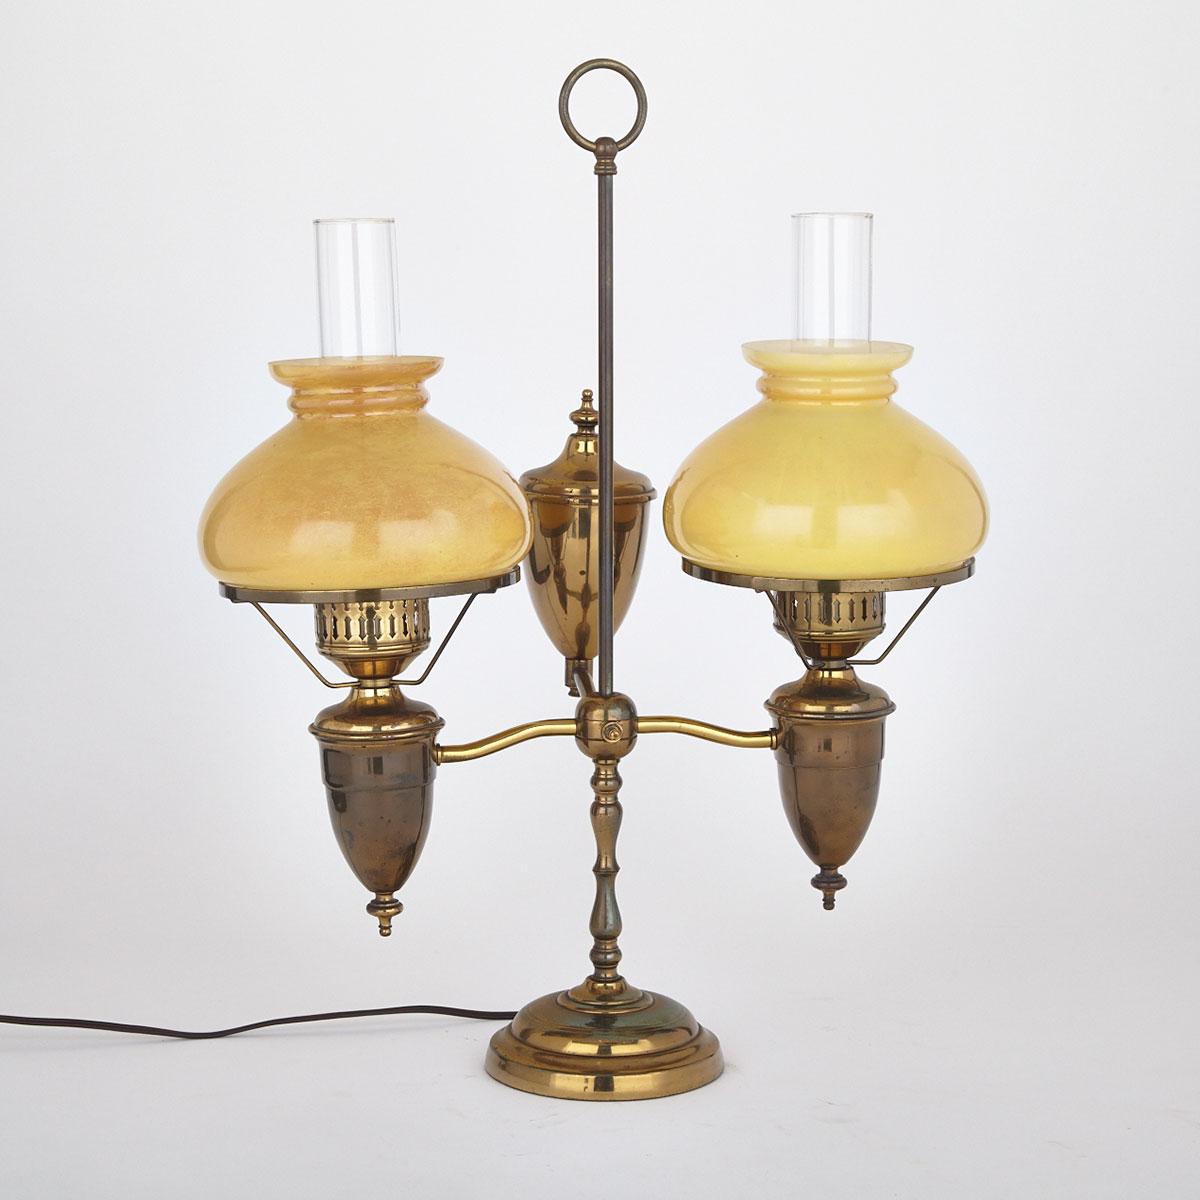 Brass Student Lamp, mid 20th century